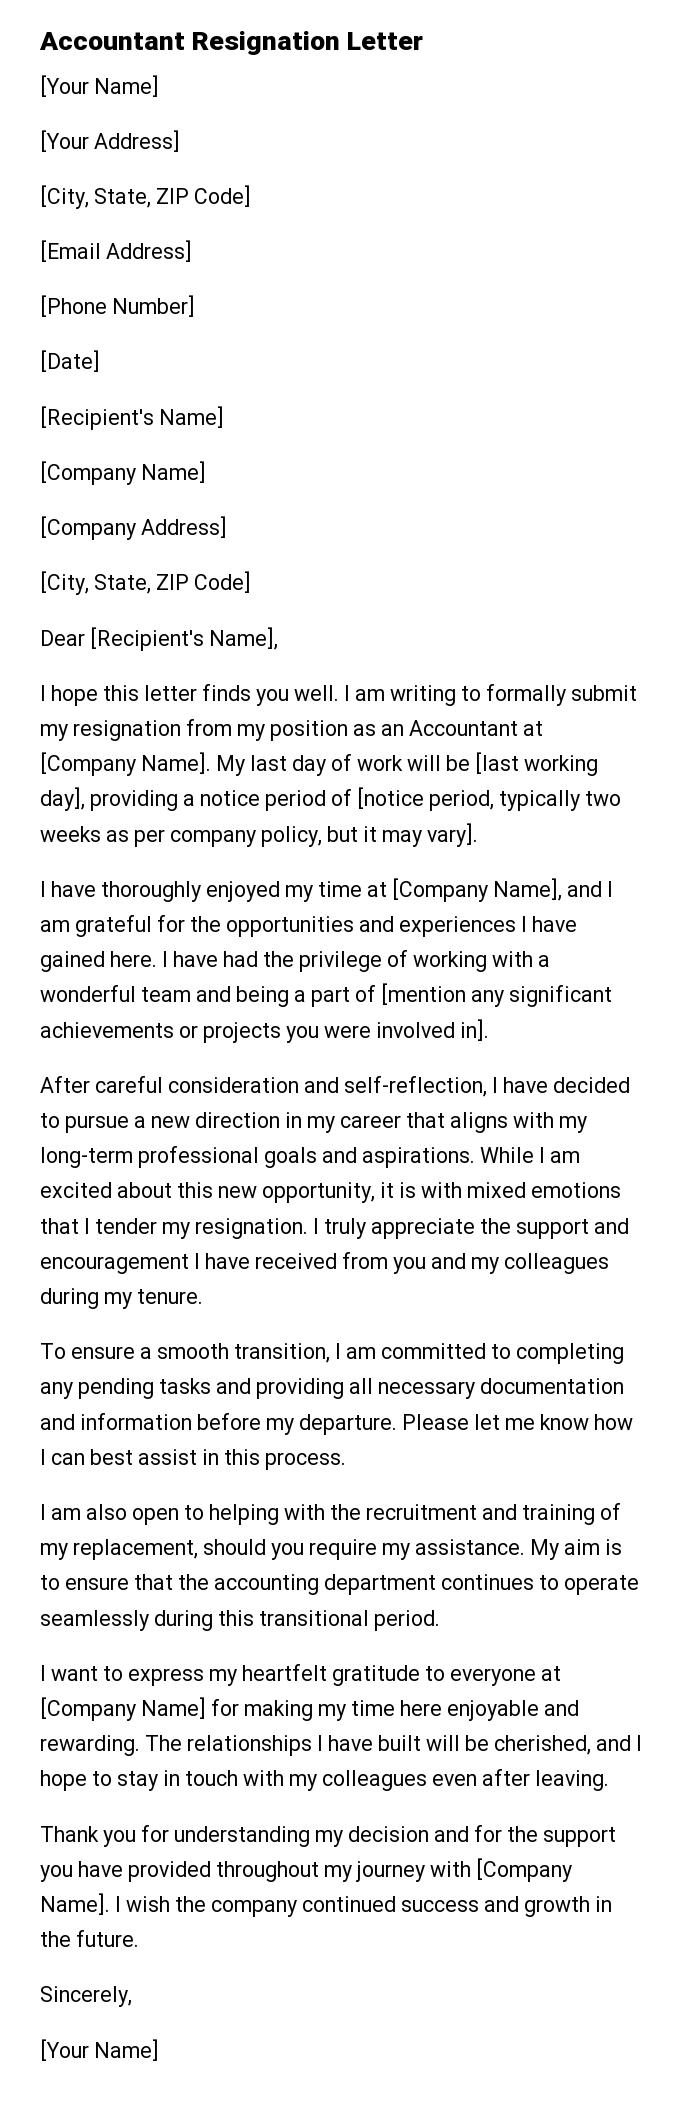 Accountant Resignation Letter